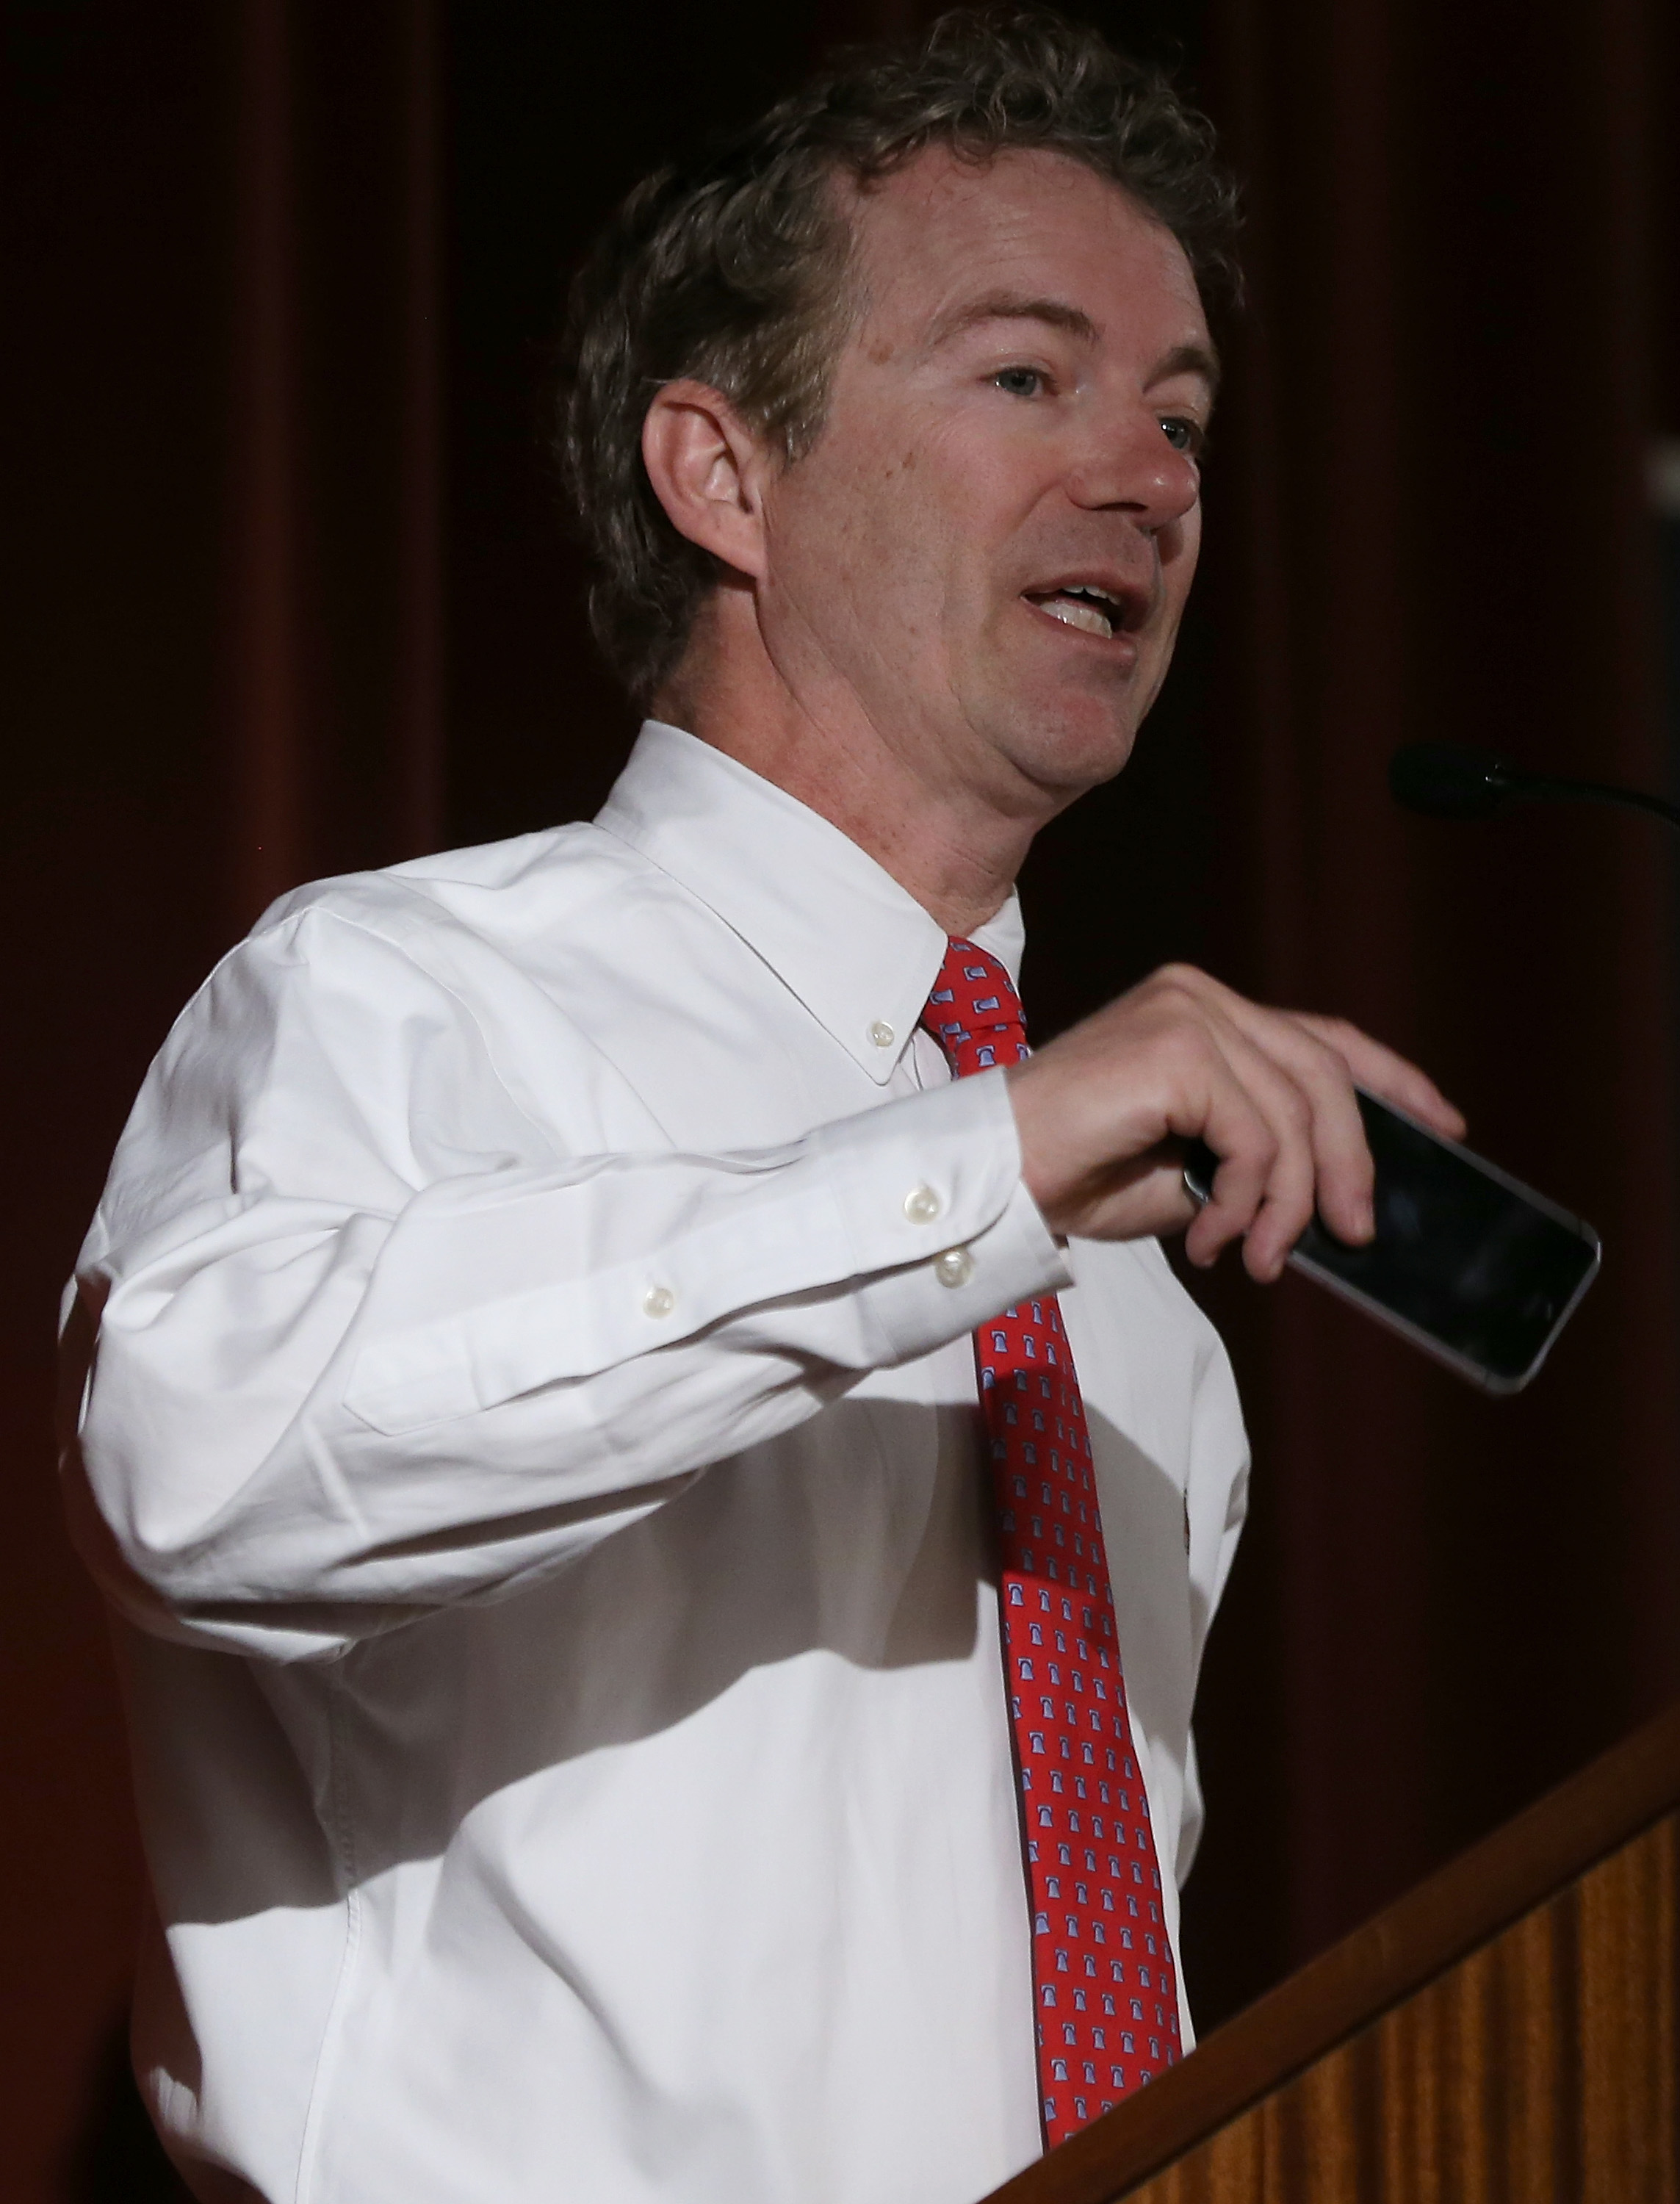 Rand Paul speaking at the University of California, Berkeley, March 19, 2014